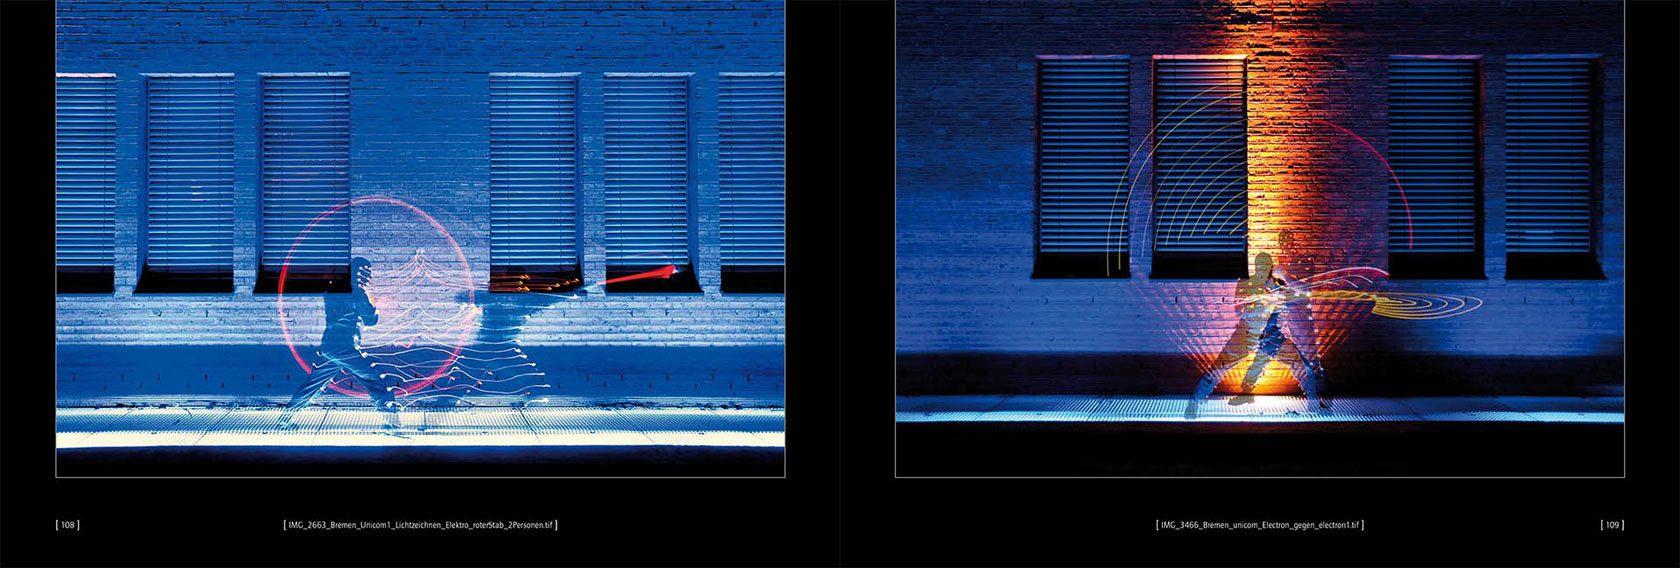 Faszination Lichtkunst Publikation Cover Light Art photography by JanLeonardo